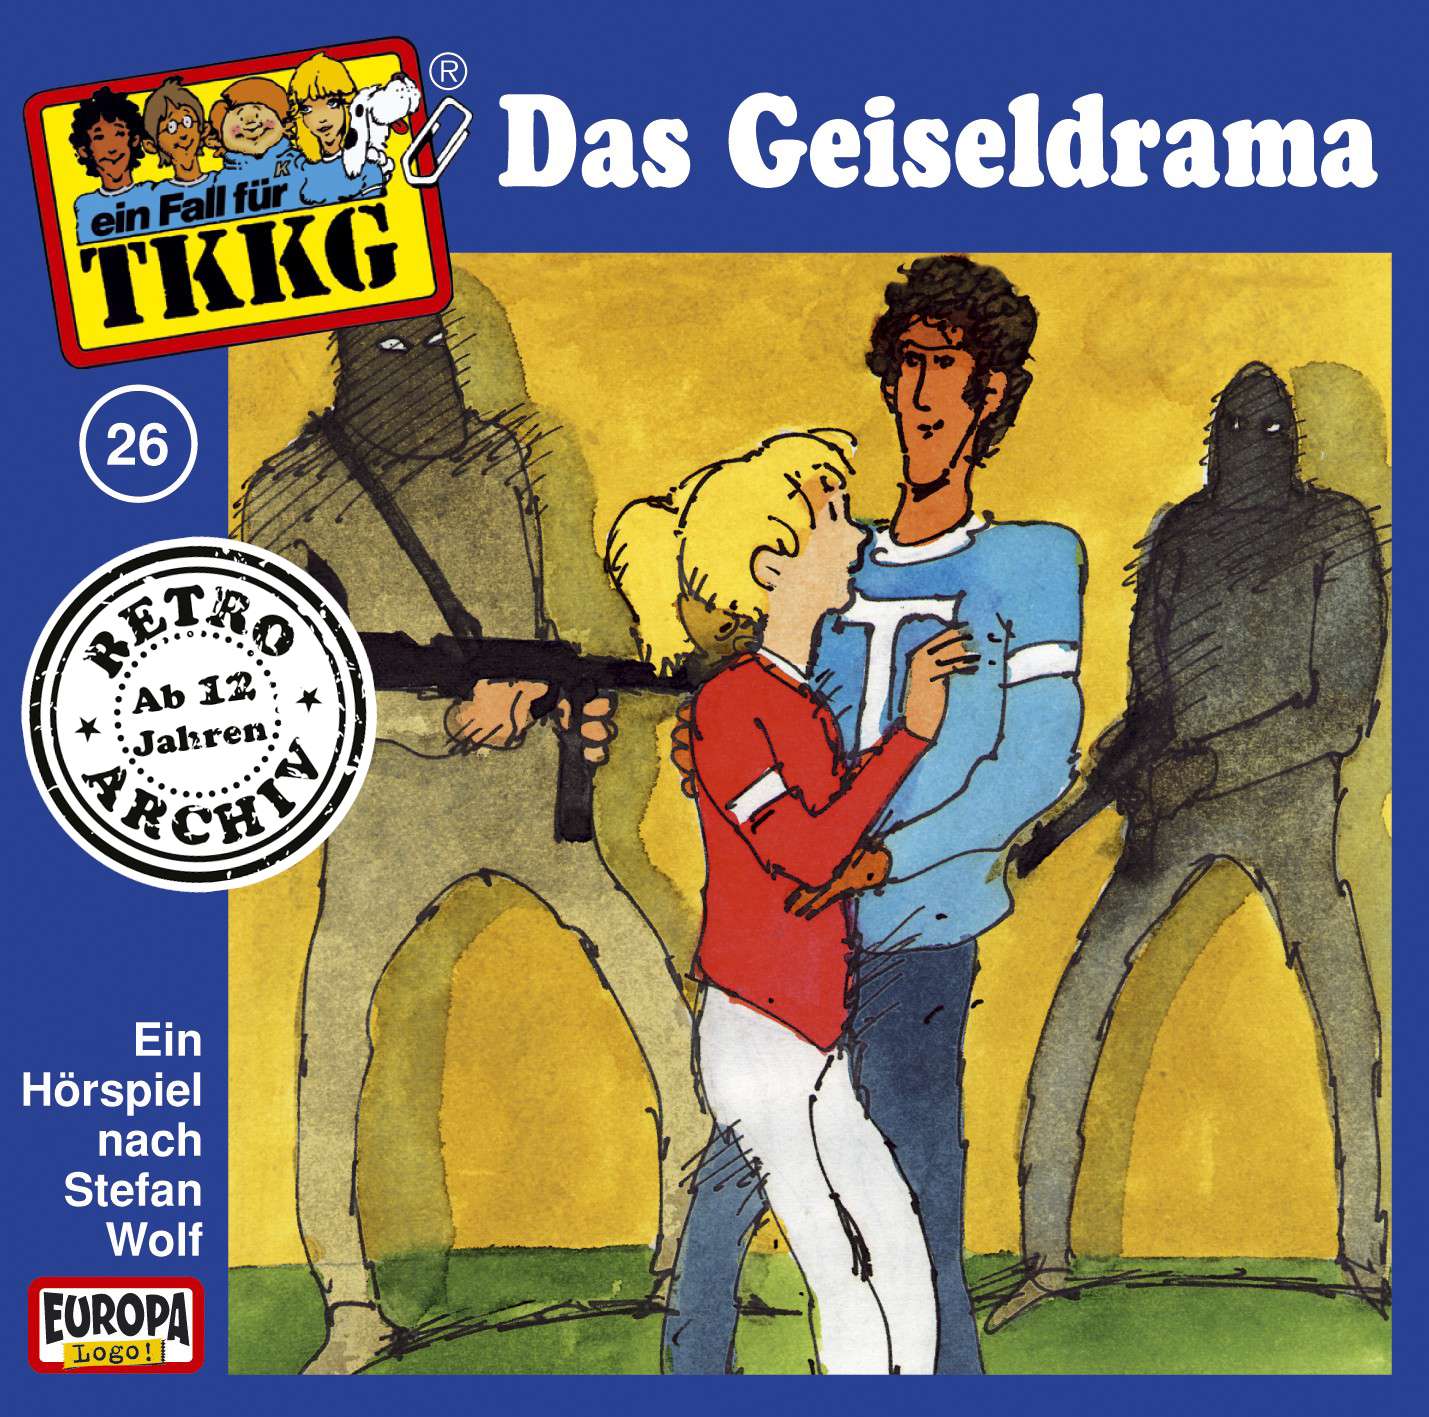 TKKG Retro-Archiv - Das Geiseldrama